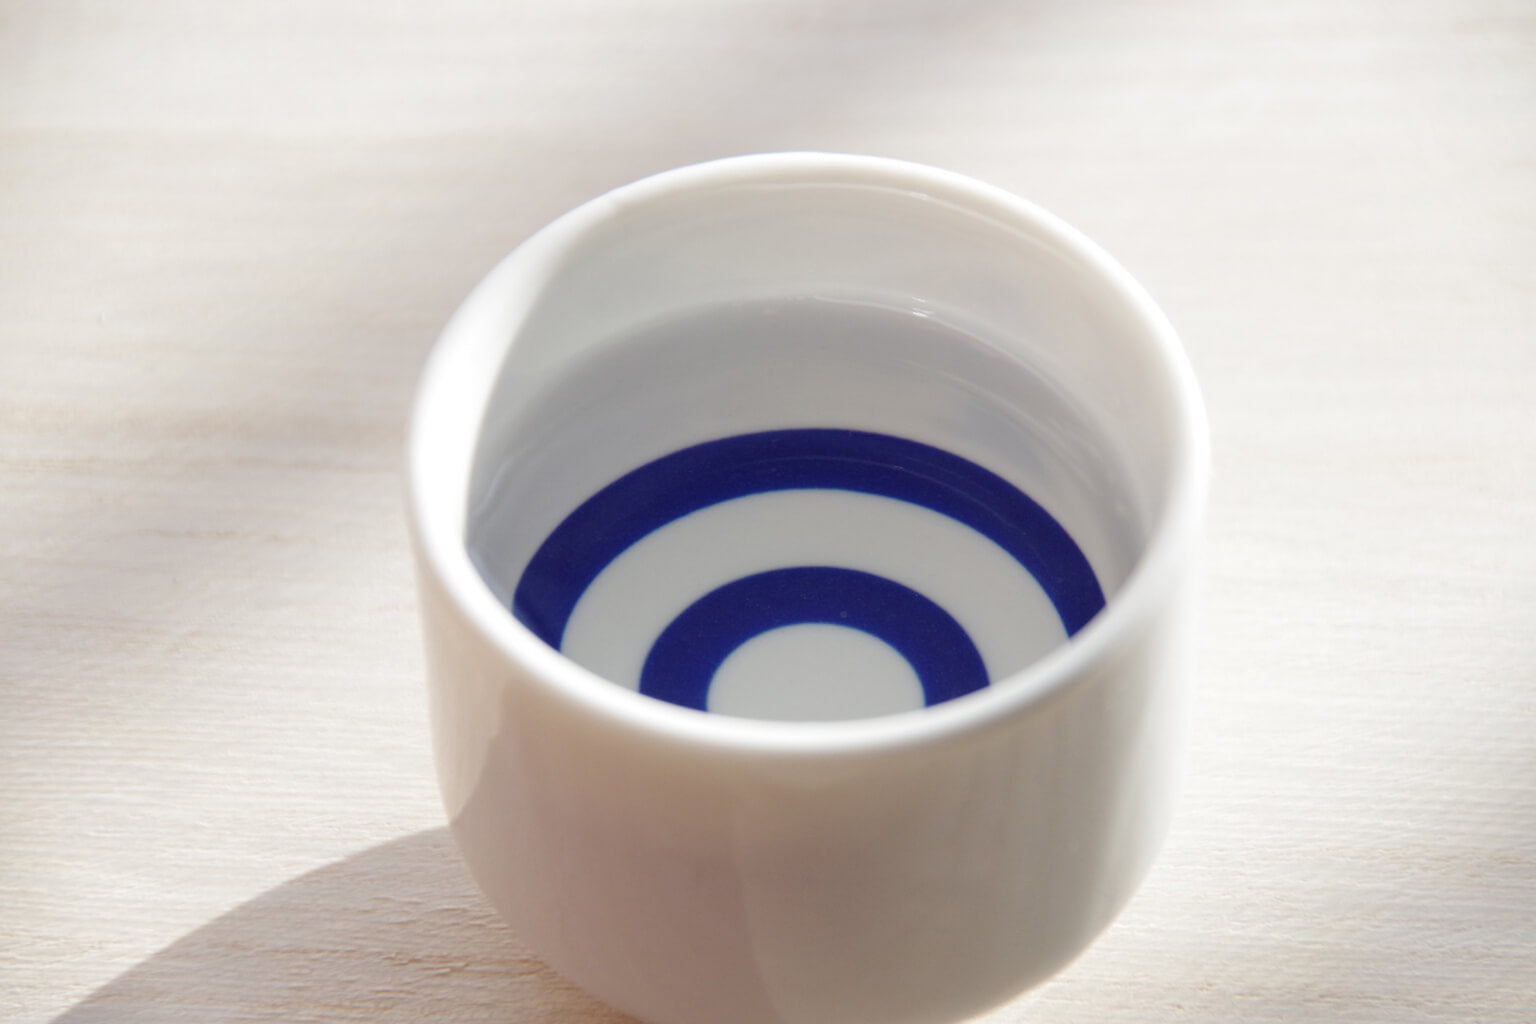 The “janome” (or “kikichoko”) is a porcelain or ceramic ochoko with a blue bullseye pattern